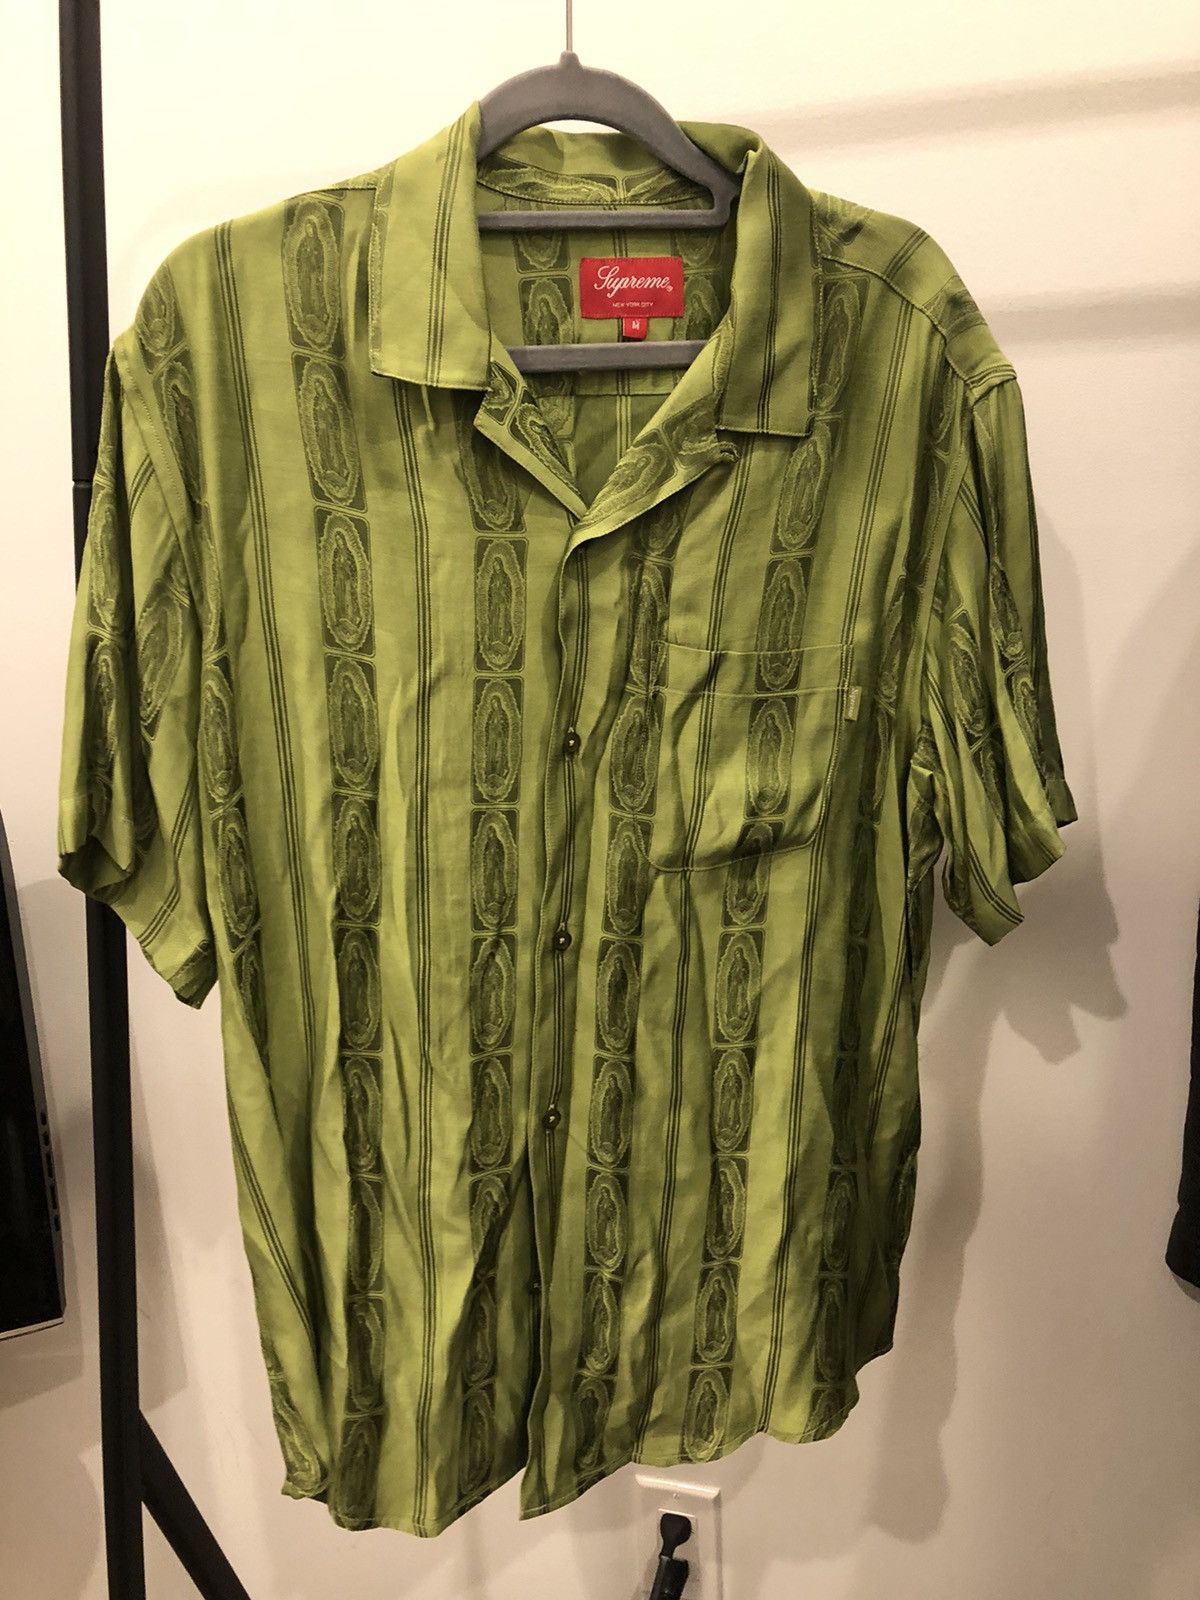 Supreme Supreme Guadalupe S/S Shirt - Green | Grailed